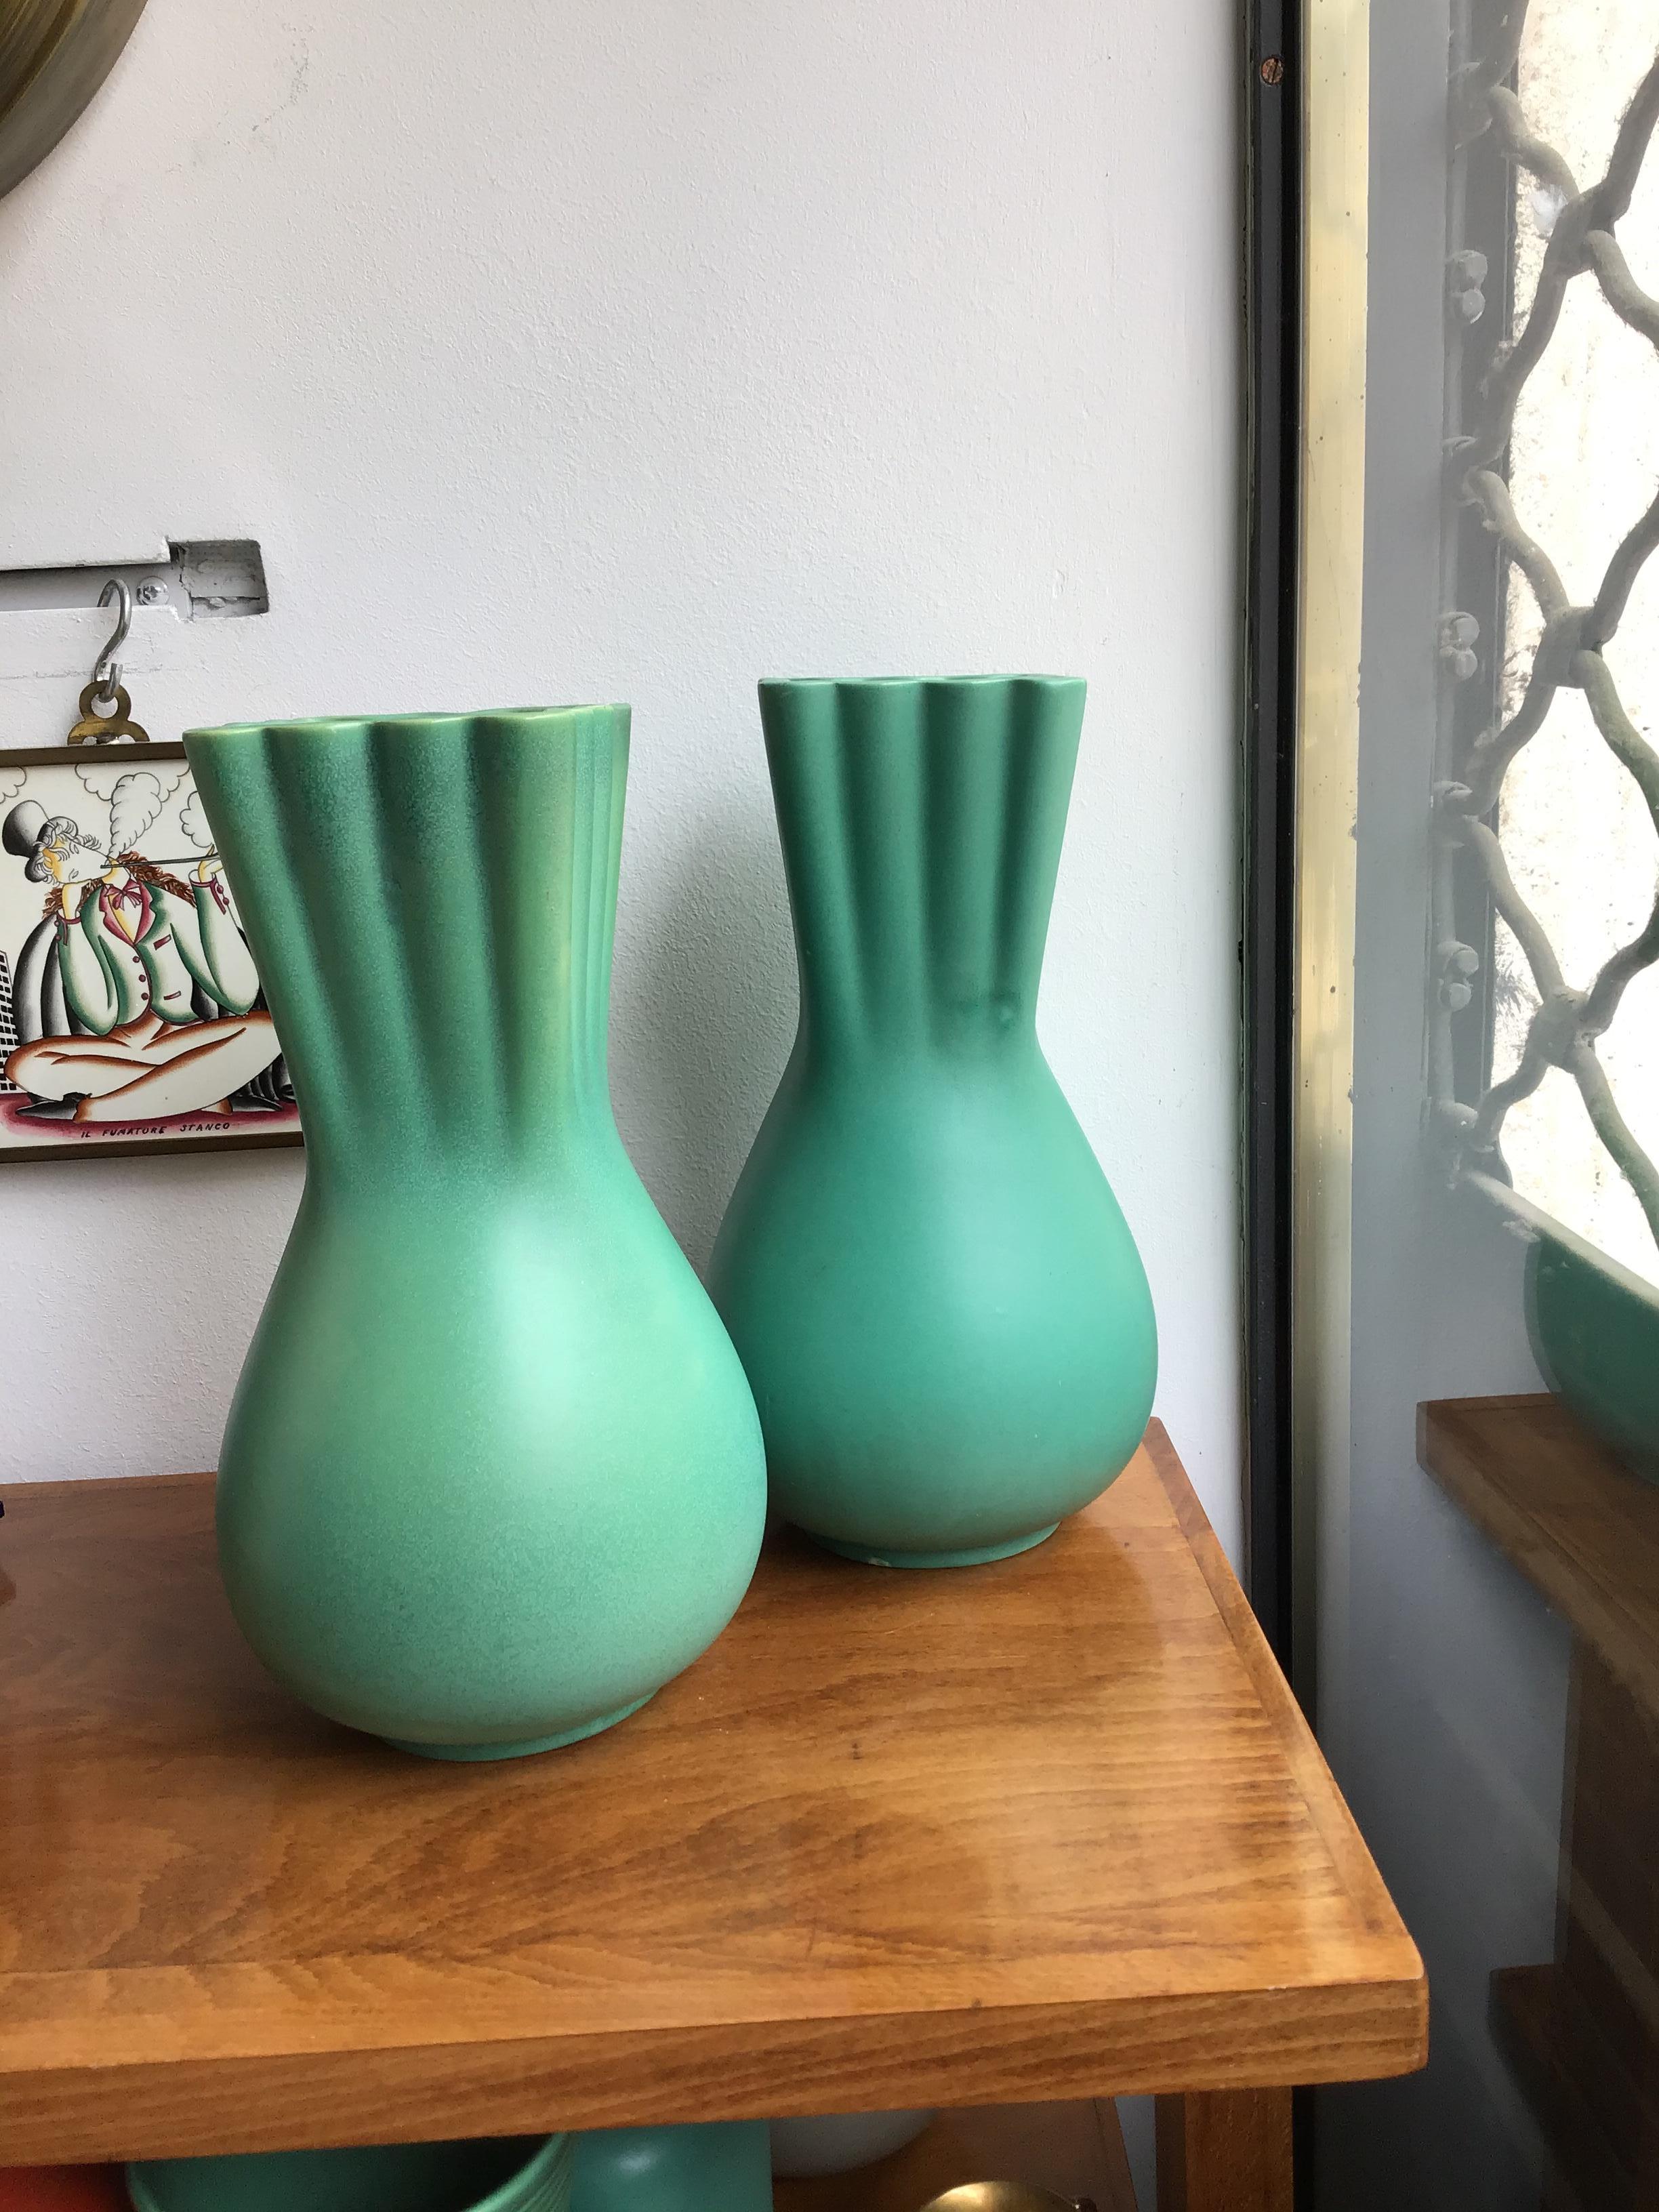 Richard Ginori Giovanni Gariboldi Green Vase Ceramic, 1950, Italy For Sale 9